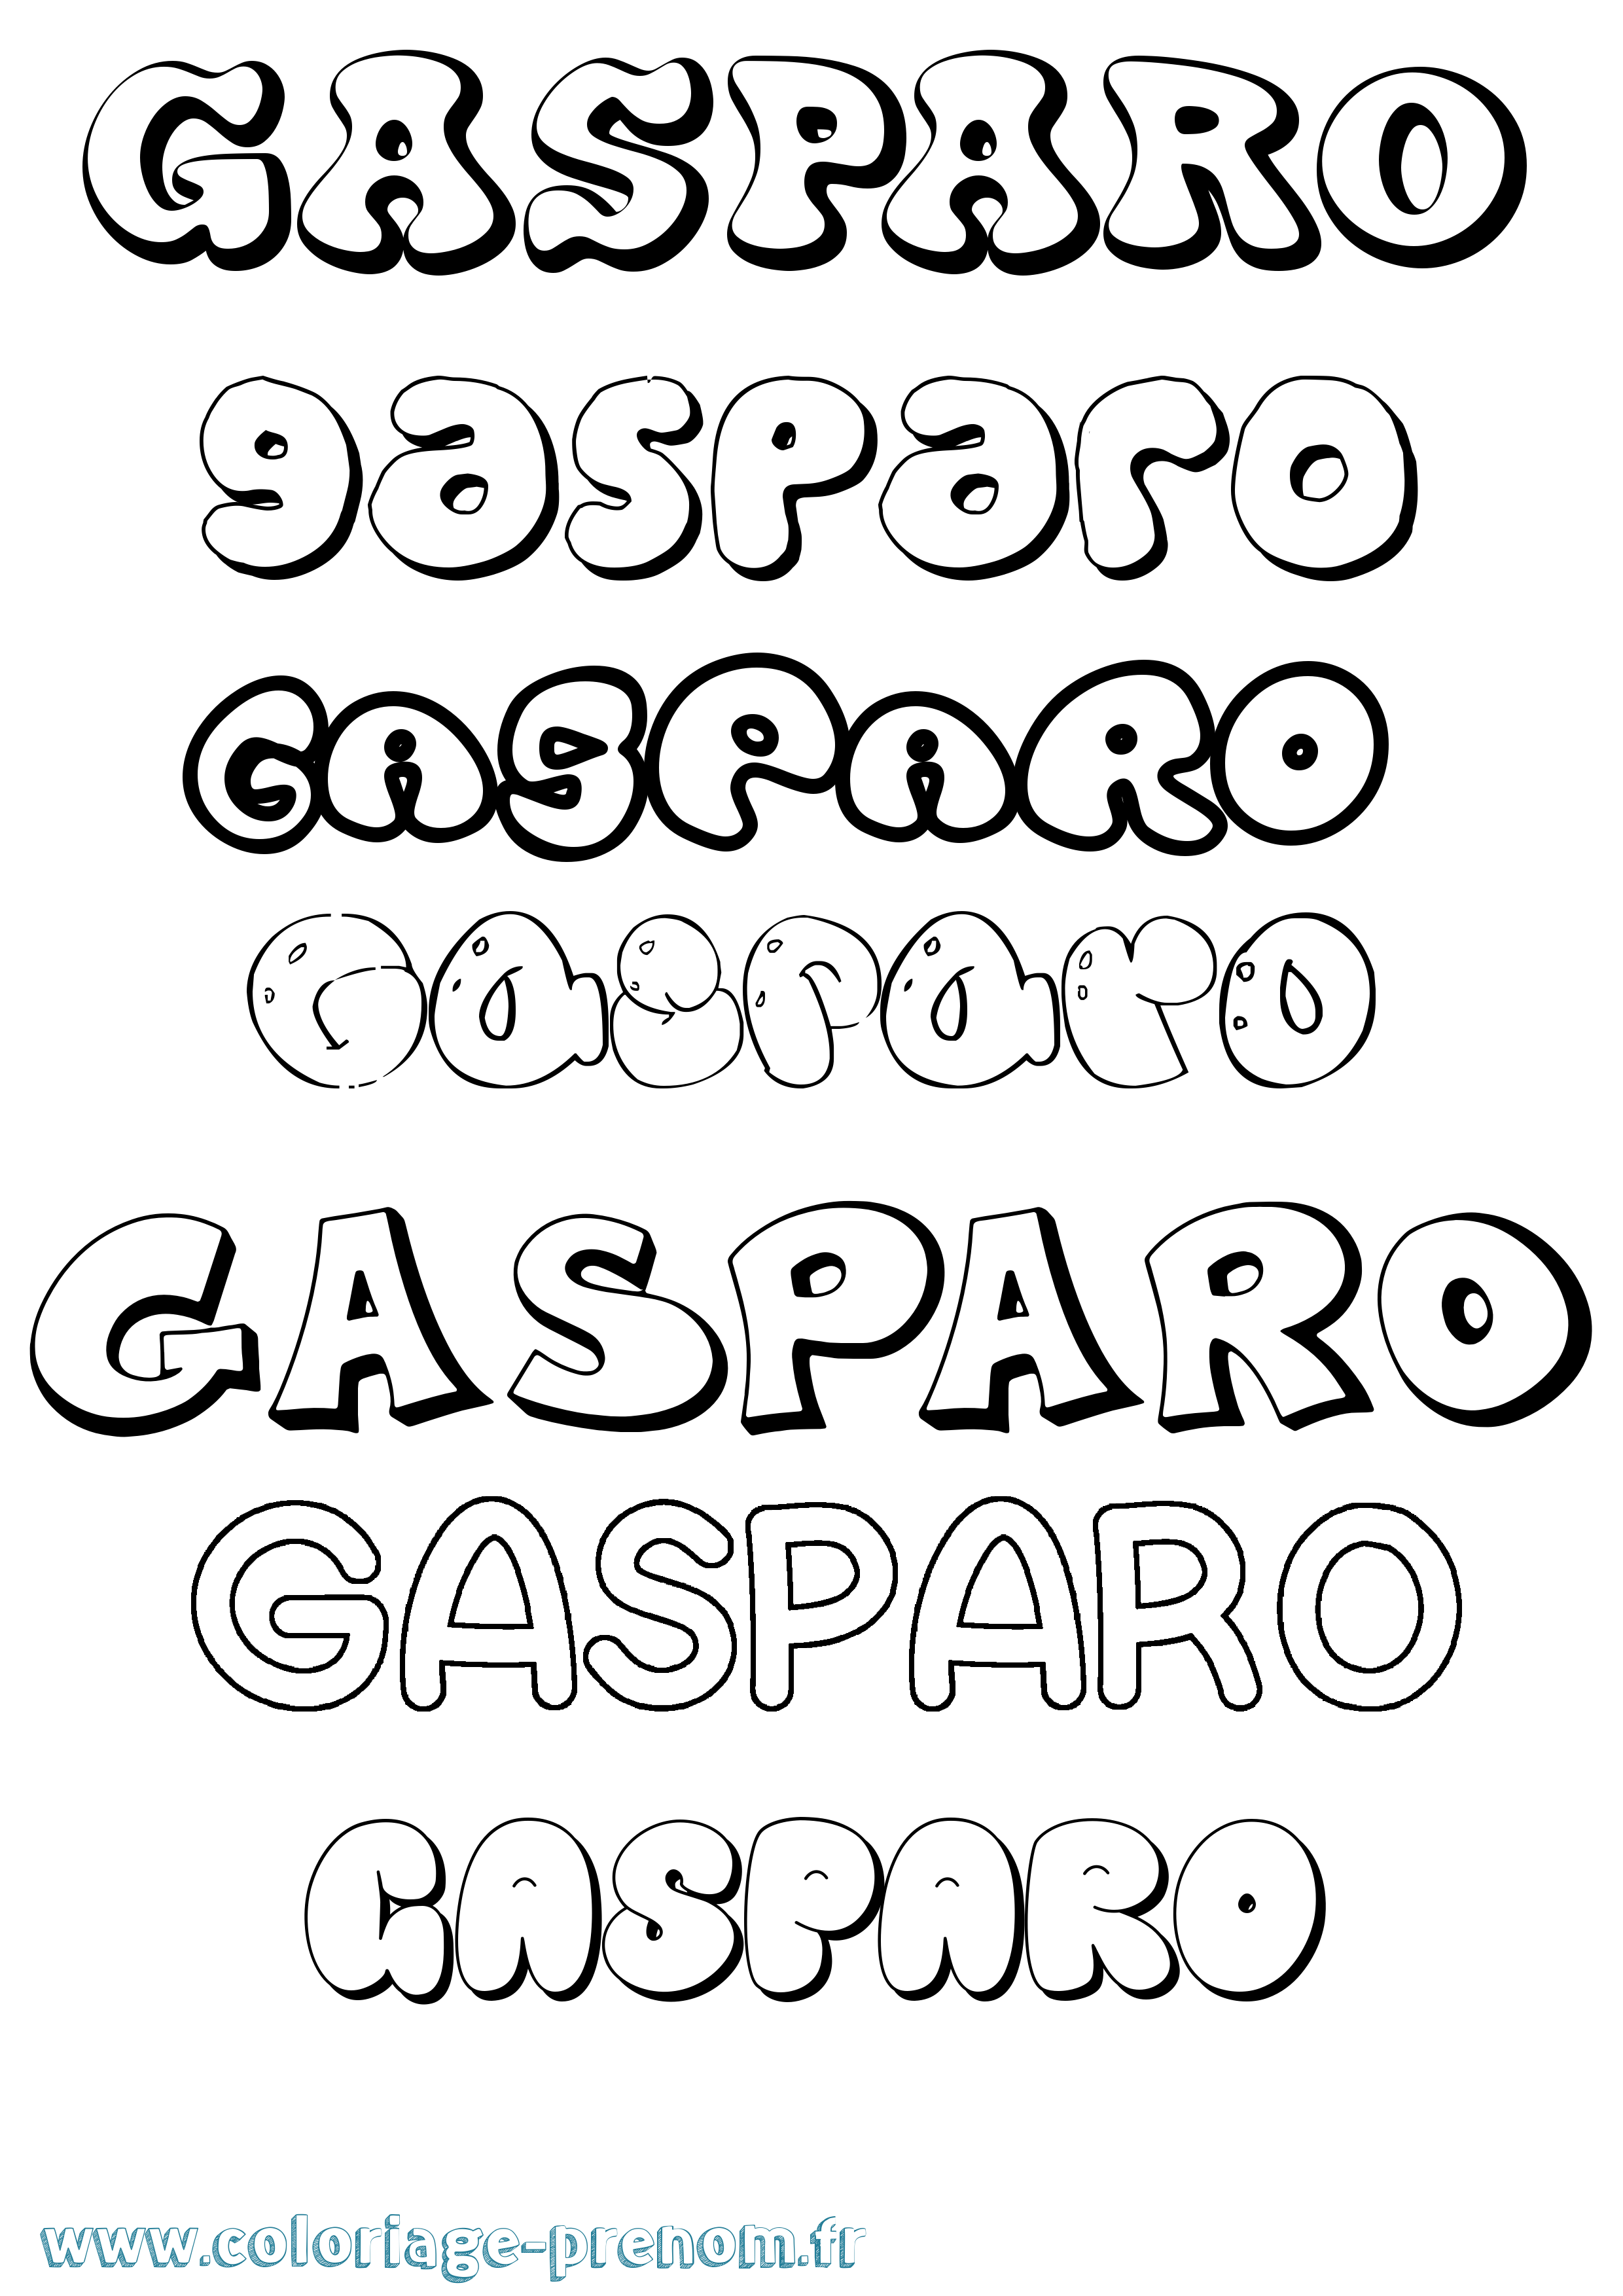 Coloriage prénom Gasparo Bubble